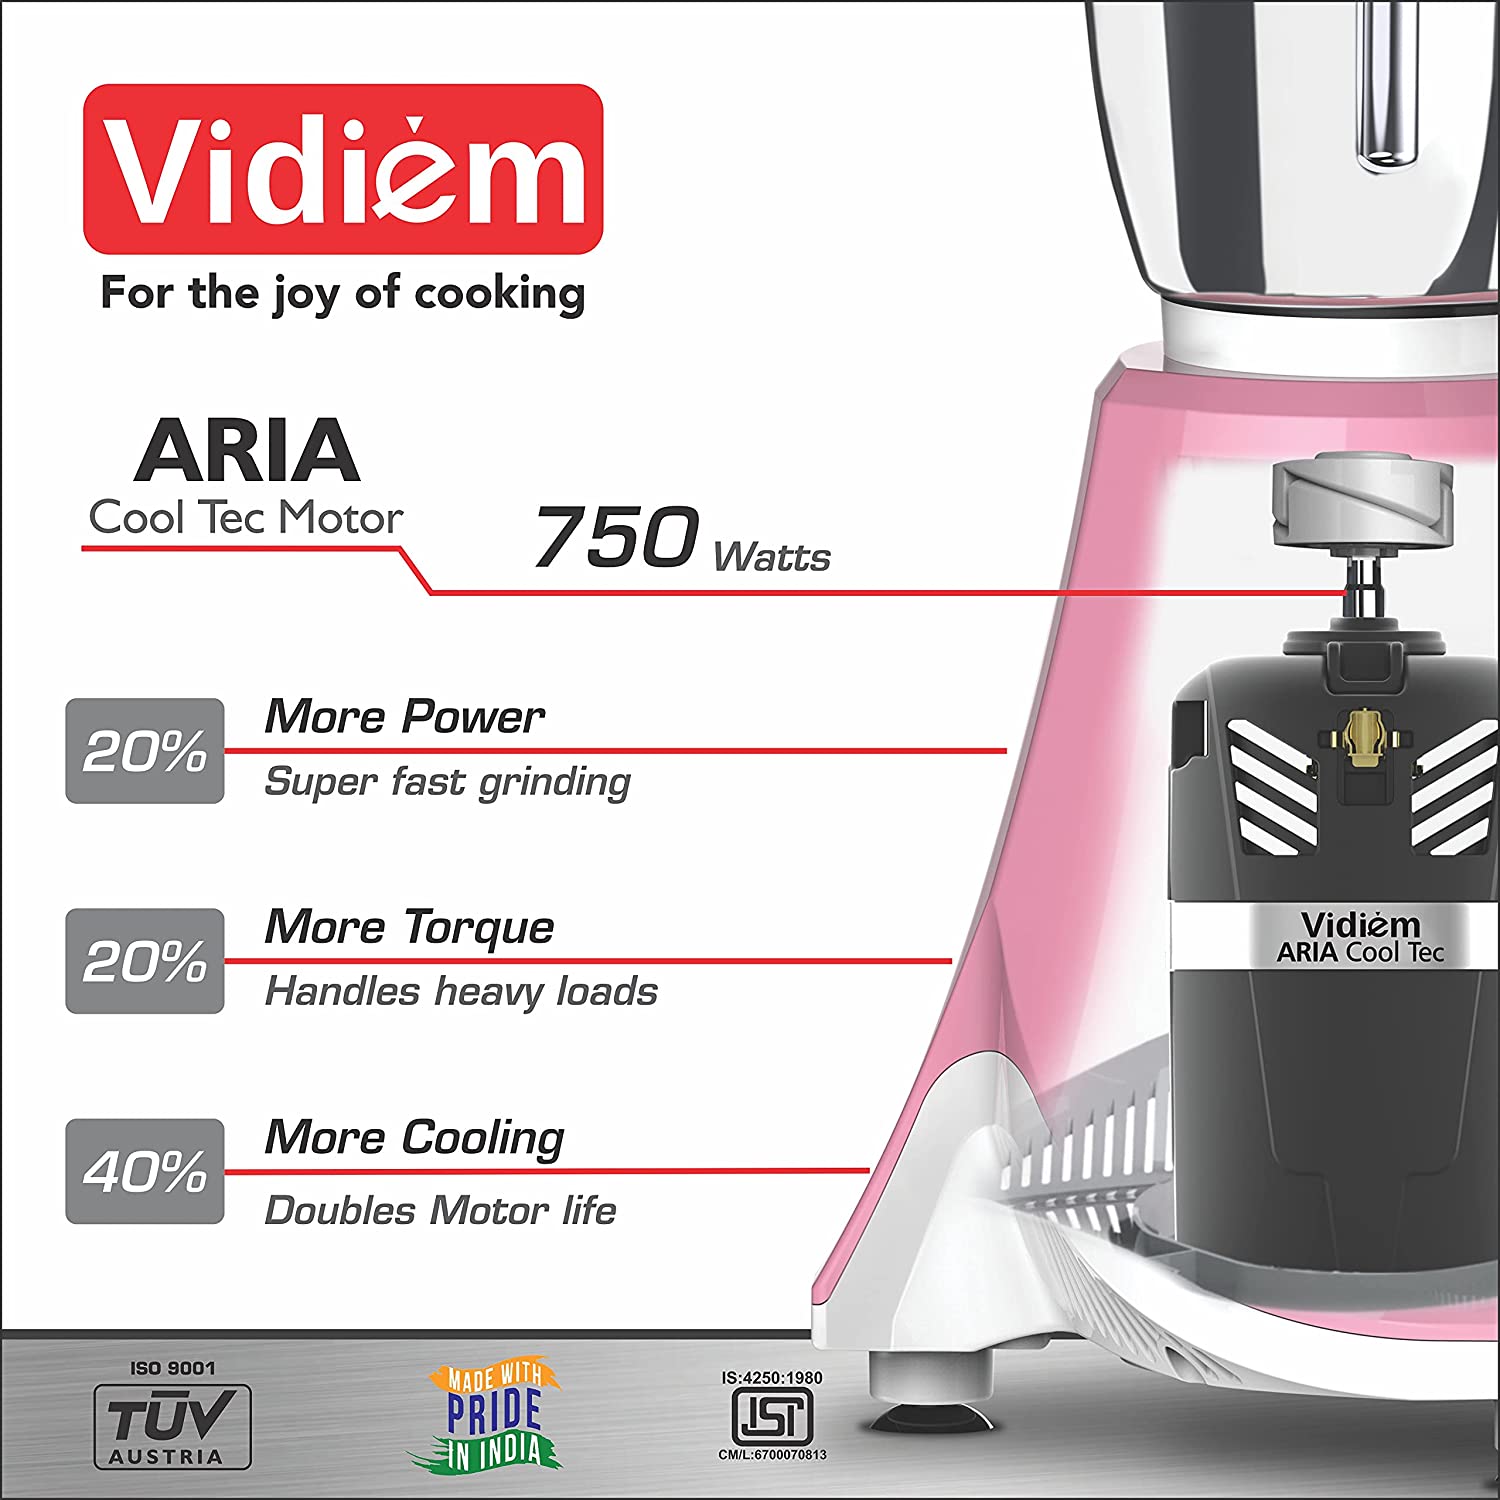 Vidiem MG 584 A IVY Plus 750 Watts Mixer Grinder with 4 Jars